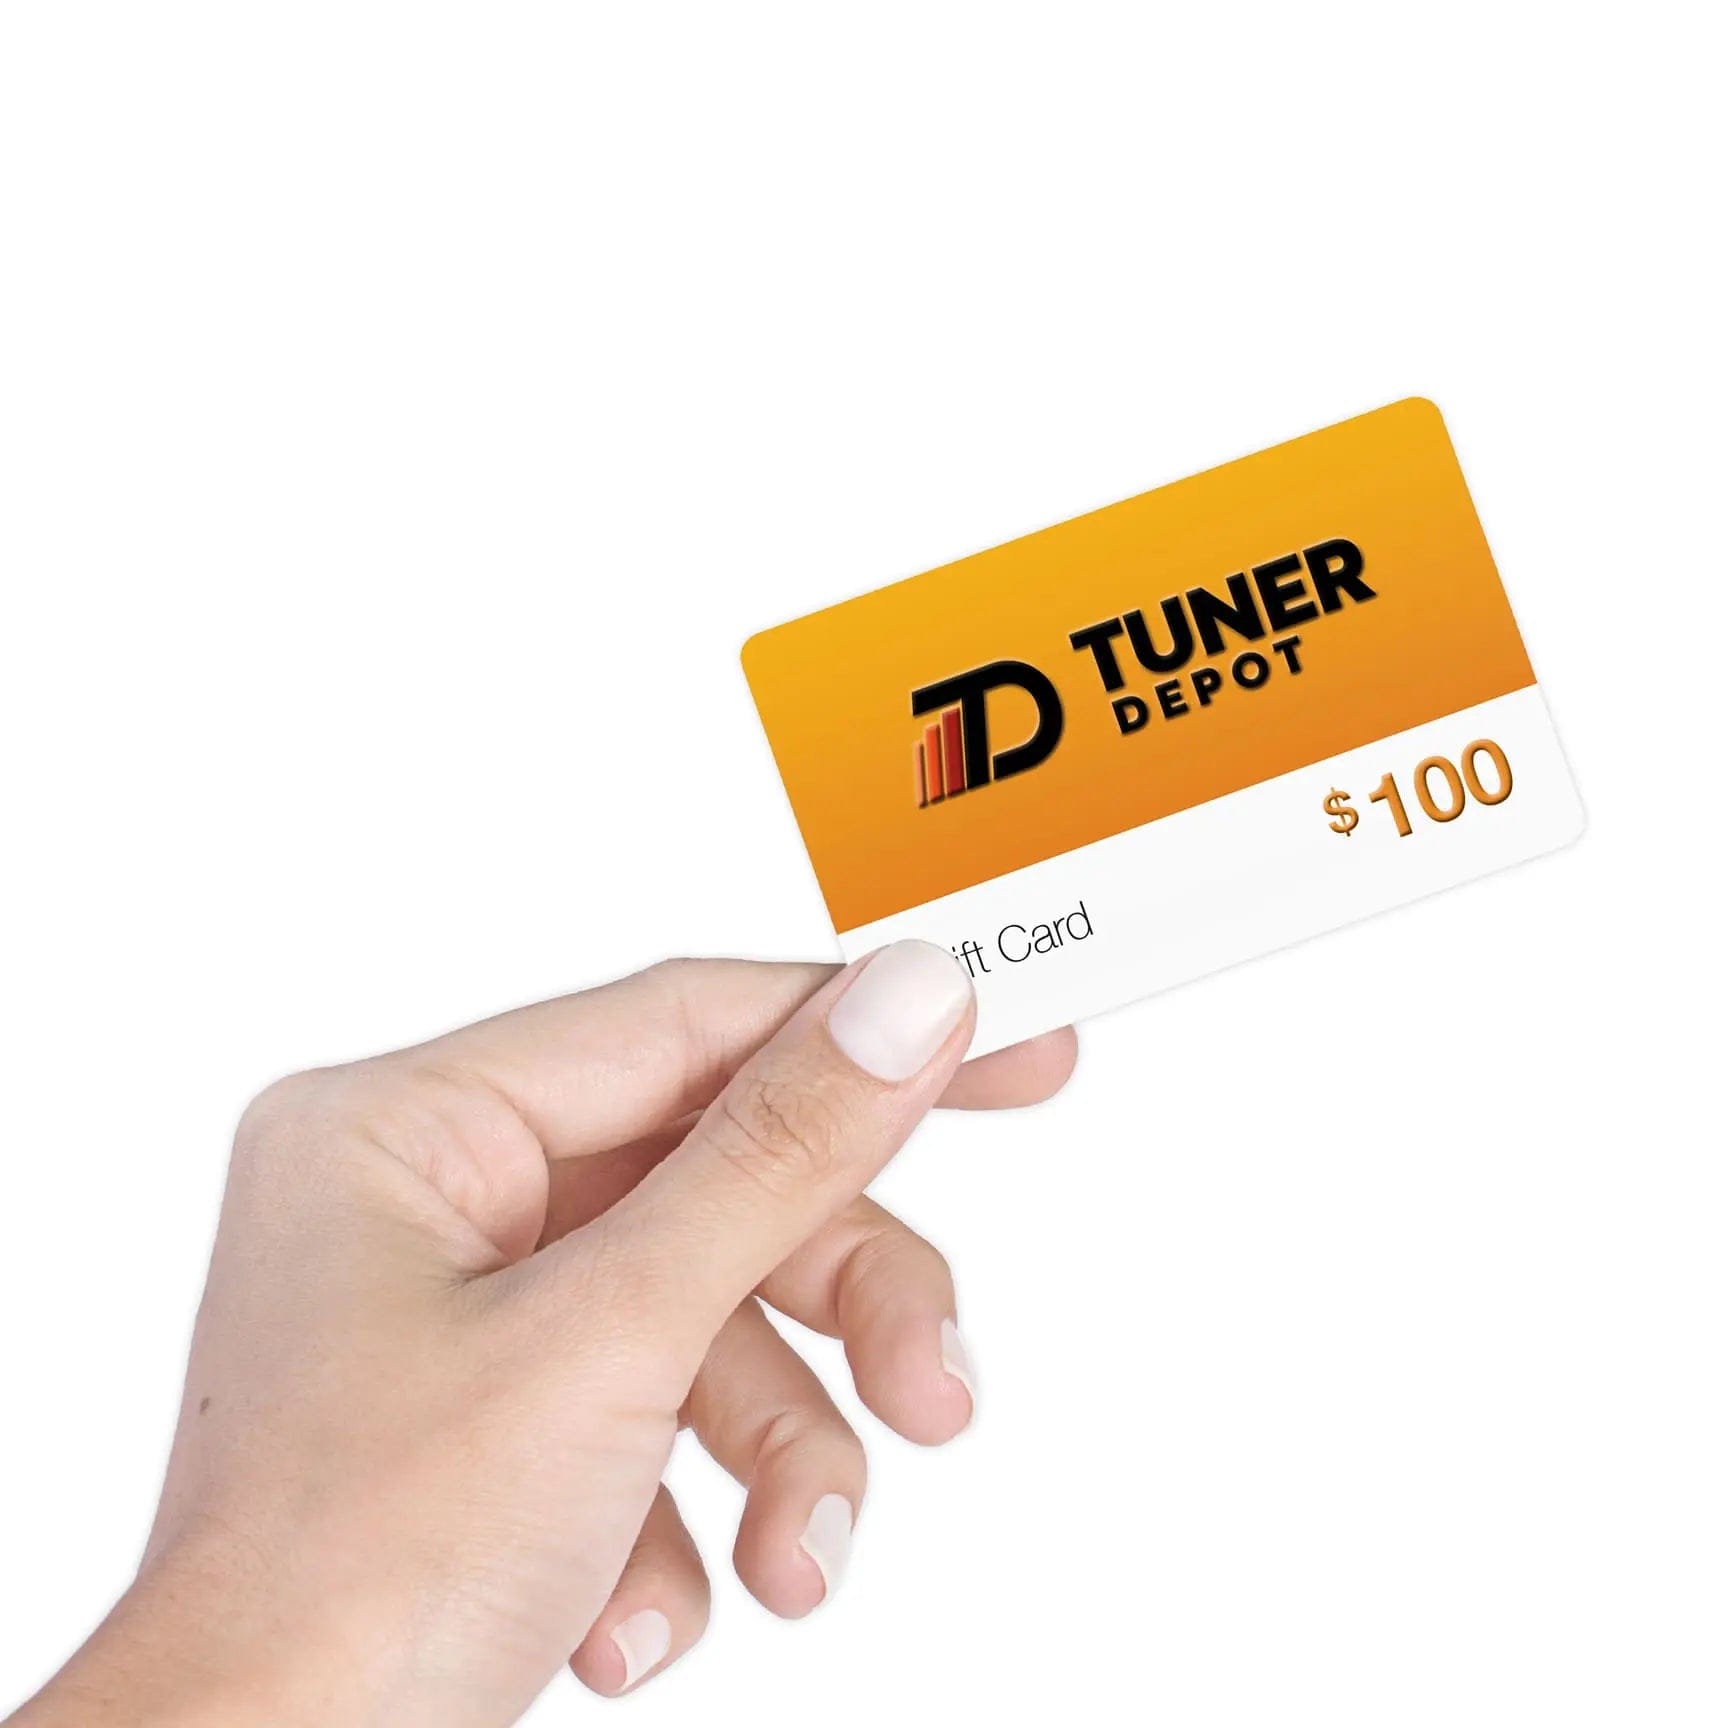 Tuner Depot  Accessories $100.00 Tuner Depot - Gift Card